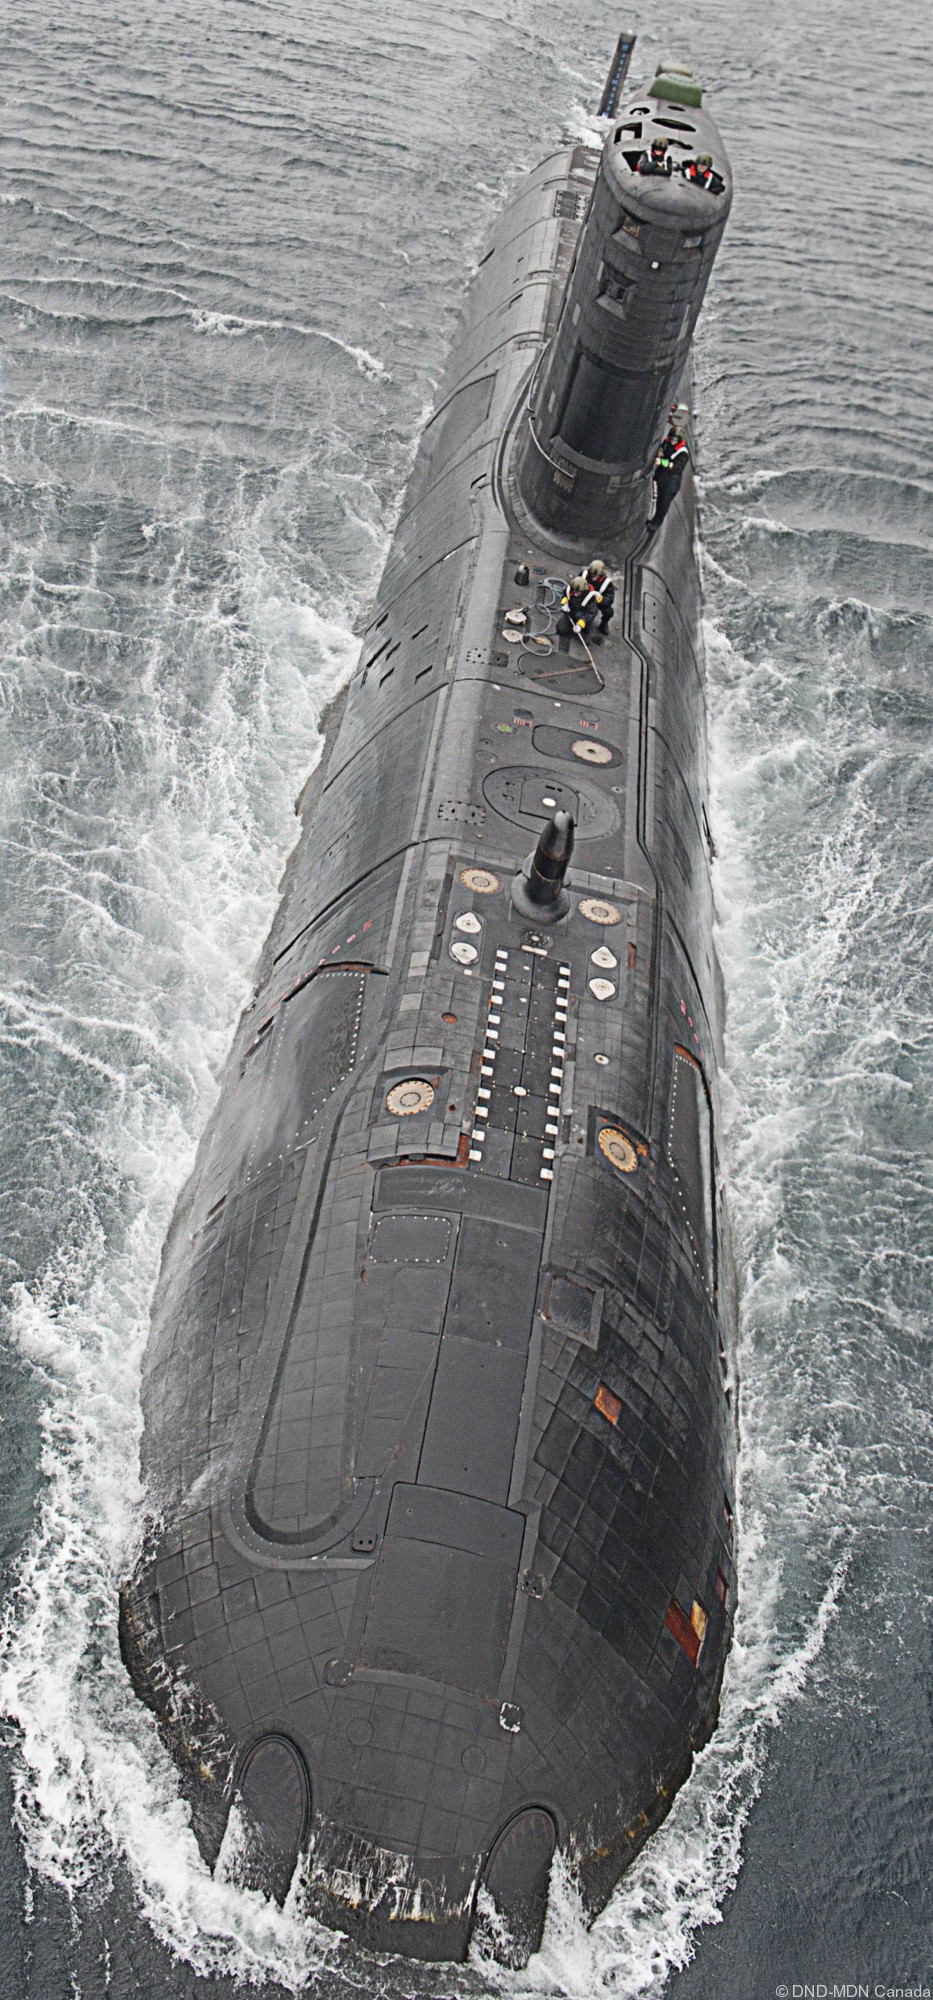 ssk-876 hmcs victoria upholder class attack submarine hunter killer ncsm royal canadian navy 41